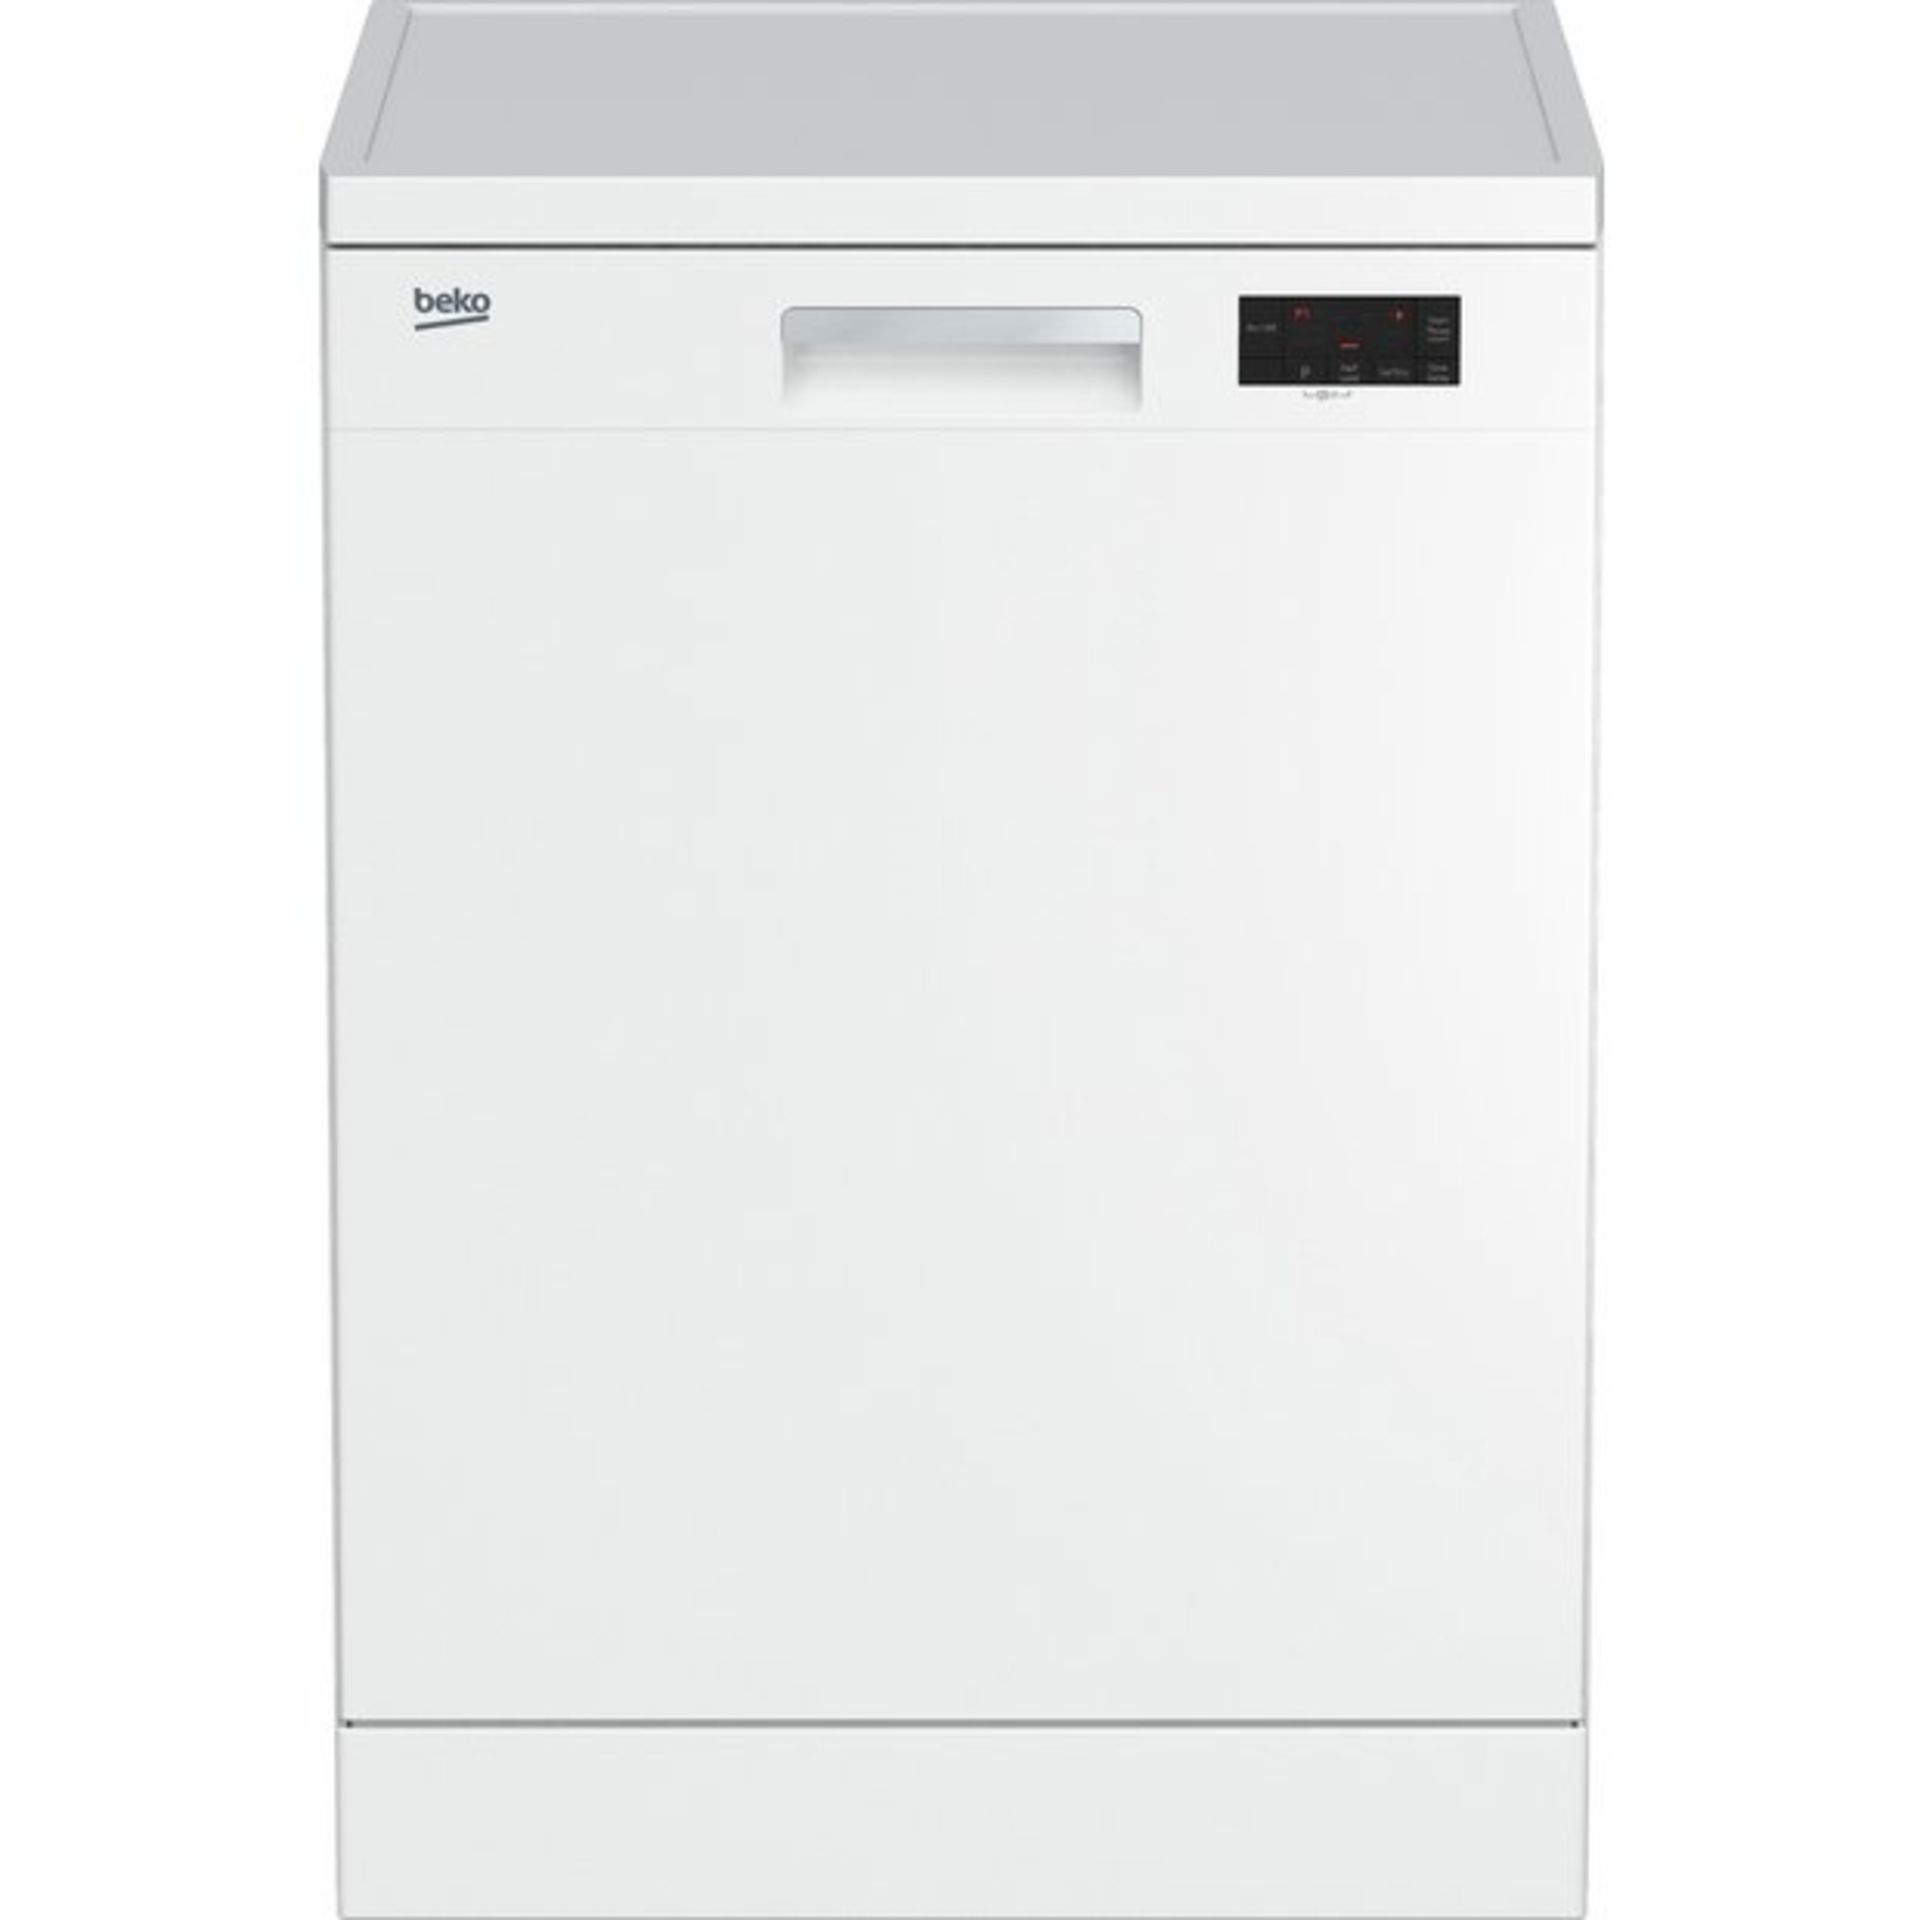 + VAT Grade A/B Beko DFN16430W Full Size Dishwasher - A+++ Energy Rating - Six Programmes - 30